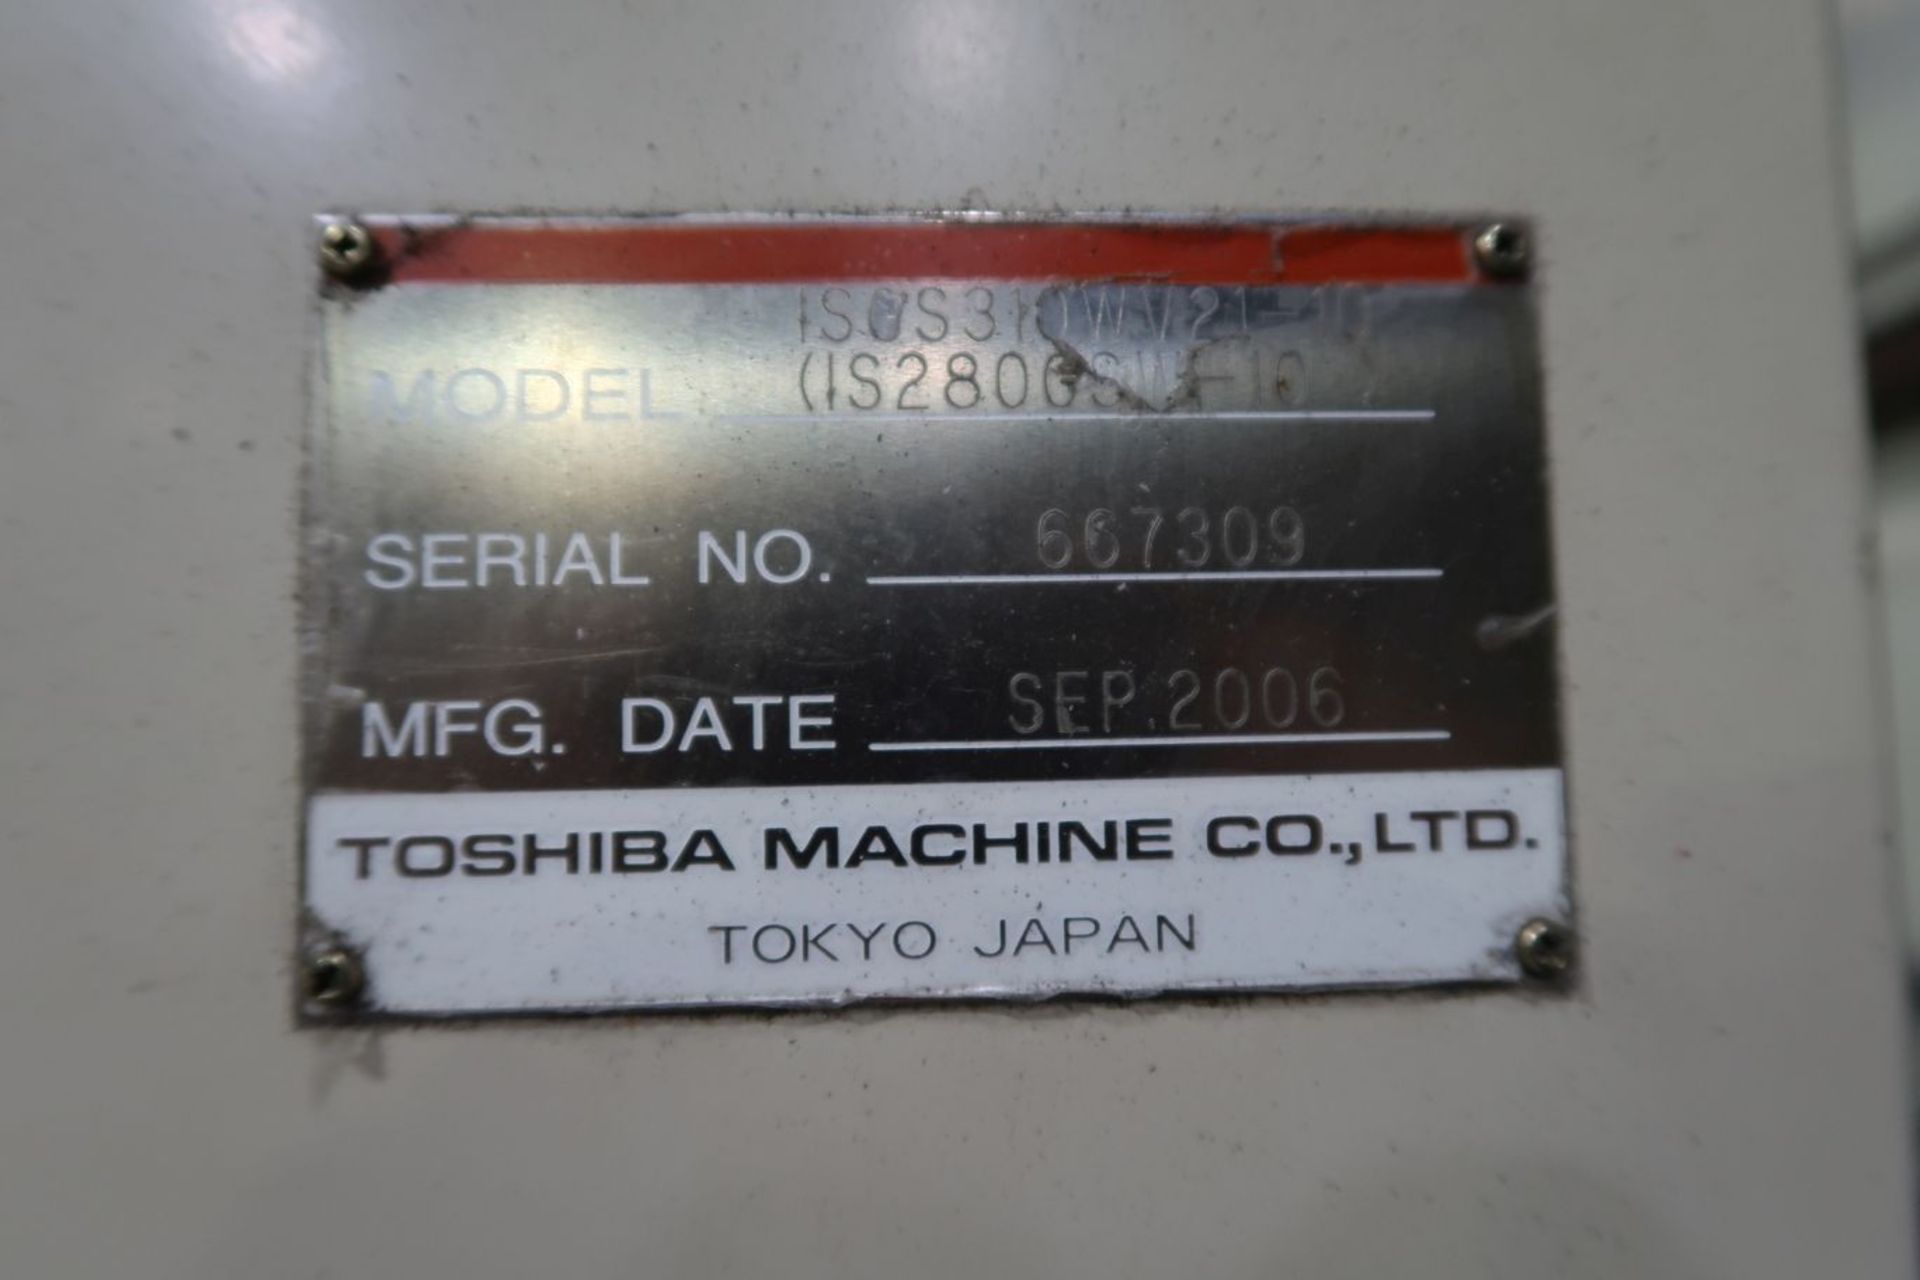 310-TON X 19-OZ. TOSHIBA MODEL ISGS310WV21-10 PLASTIC INJECTION MOLDING MACHINE (NEW 2006) - Image 20 of 20